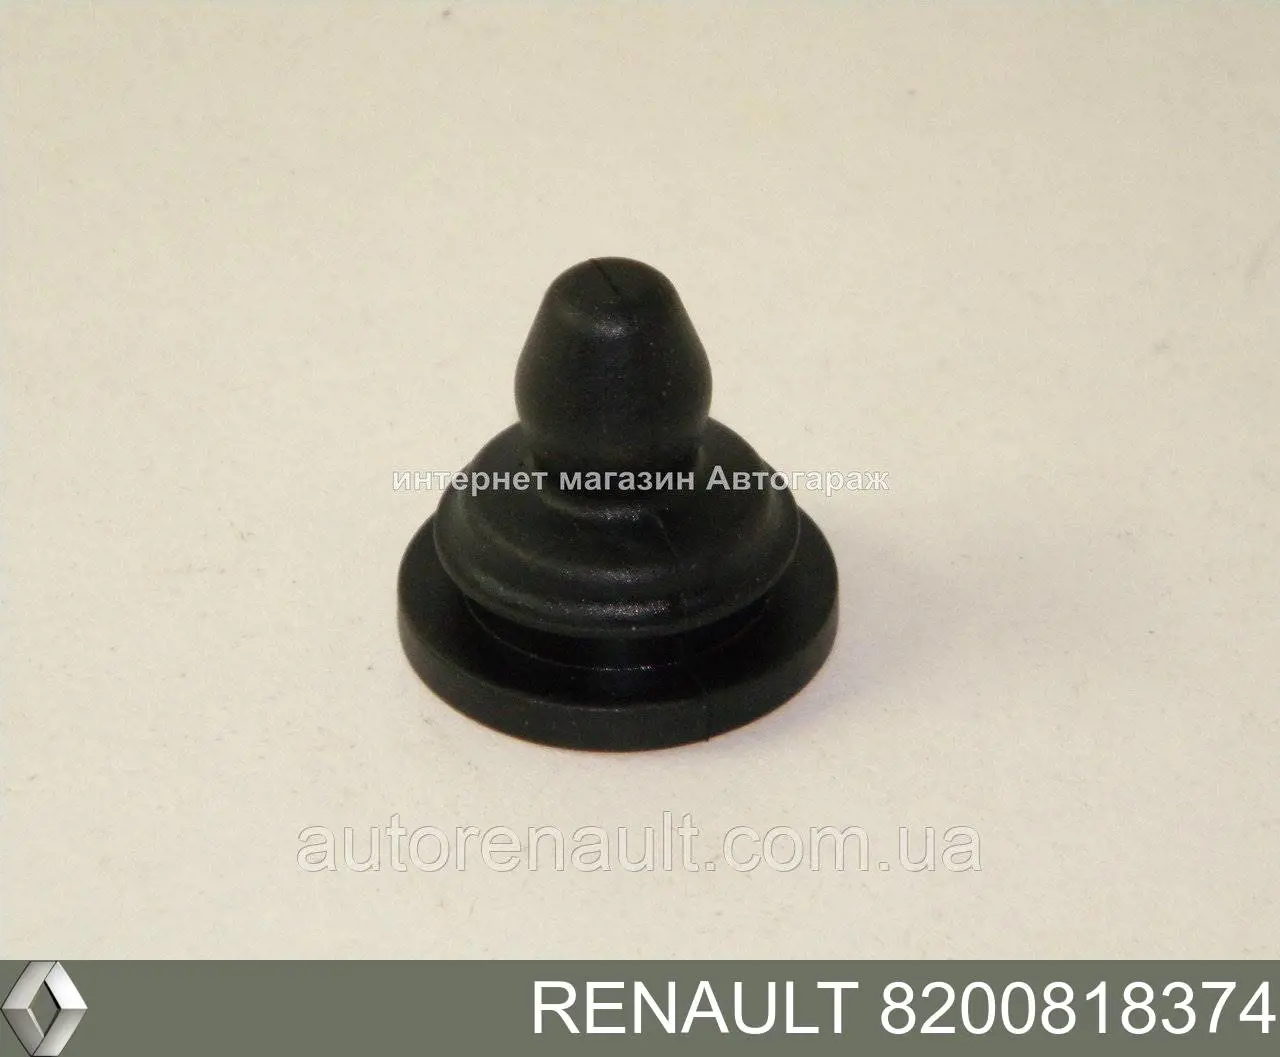 8200818374 Renault (RVI) кронштейн воздушного фильтра